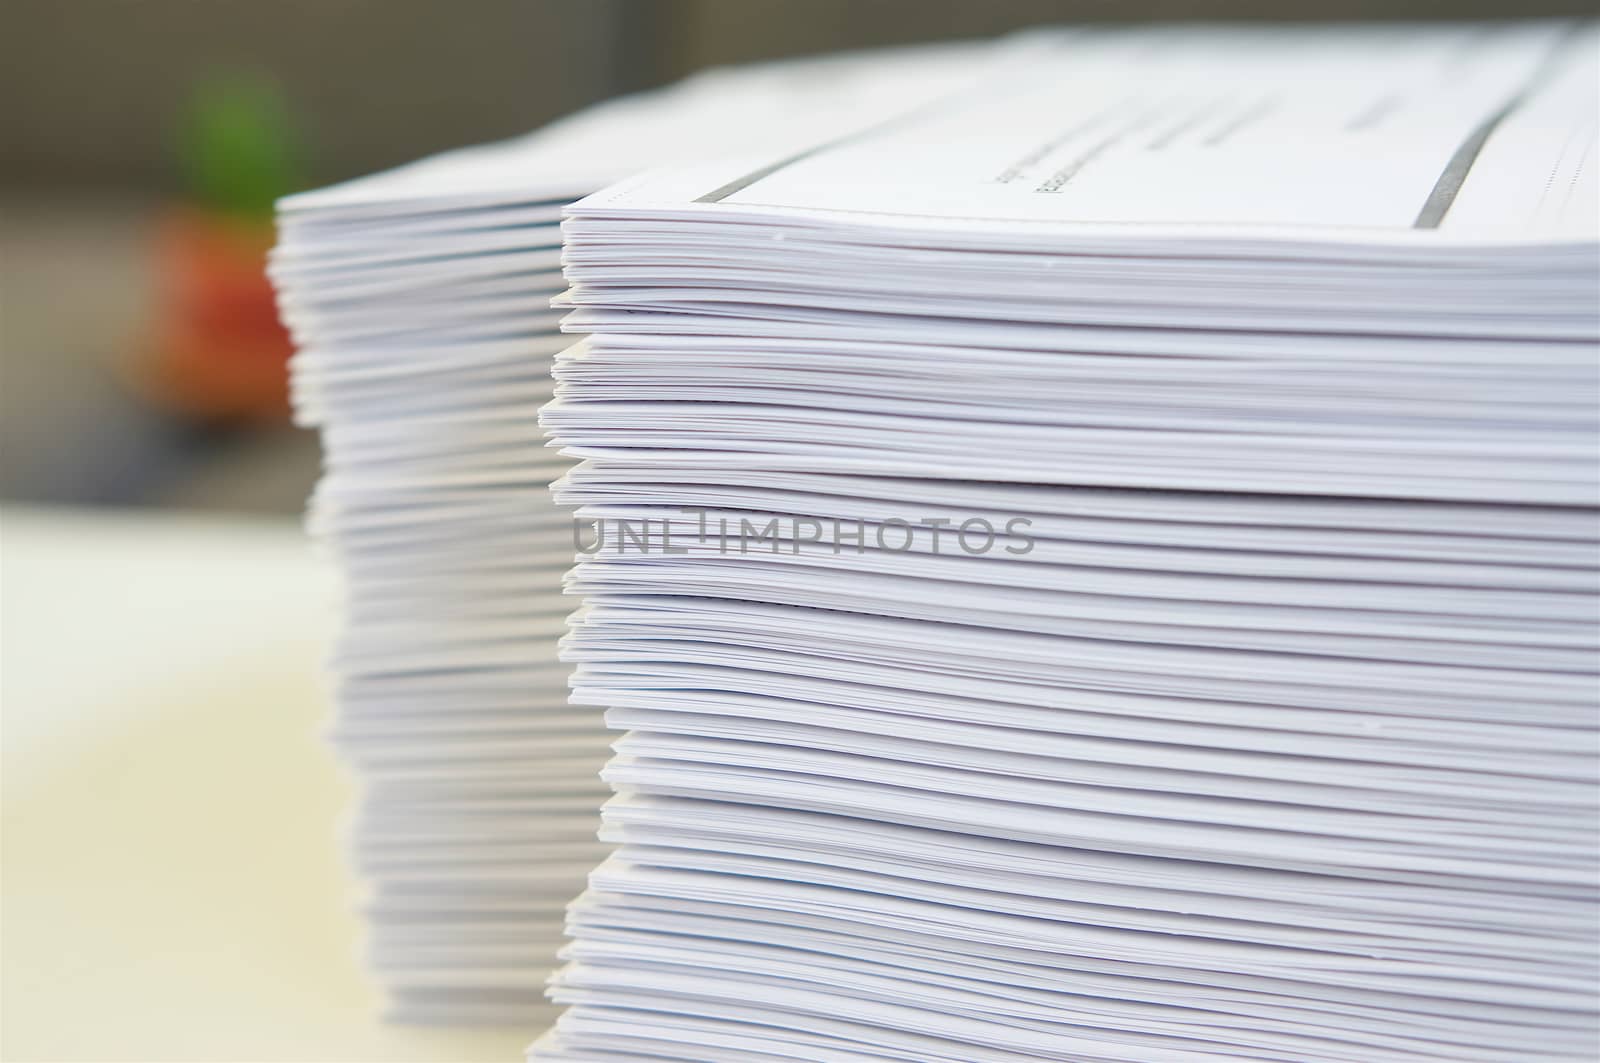 Lot of paperwork by ninun